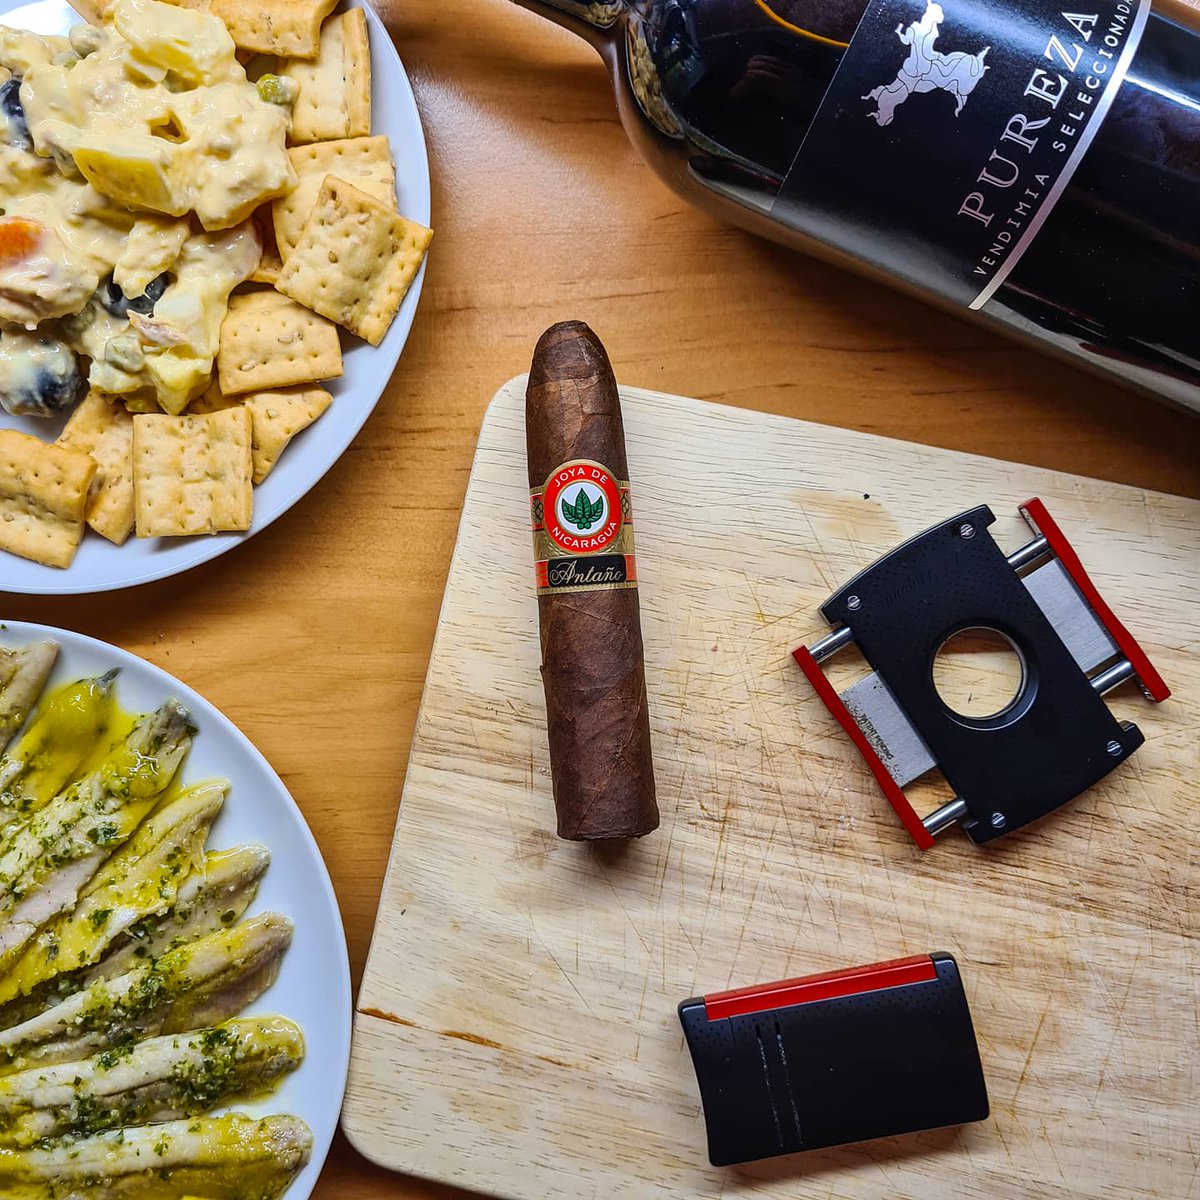 A celebrar la vuelta a la oficina. JOYA DE NICARAGUA Antaño 1970 Gran Cónsul acompañado de mi vino preferido de Madrid, Pureza Vendimia Seleccionada (Bodegas Cardeña).

 #clubmomentohumo #joyacigars #joyadenicaragua #joyadenicaraguaantaño1970 #stdupont #pureza #cigars #cigarlife